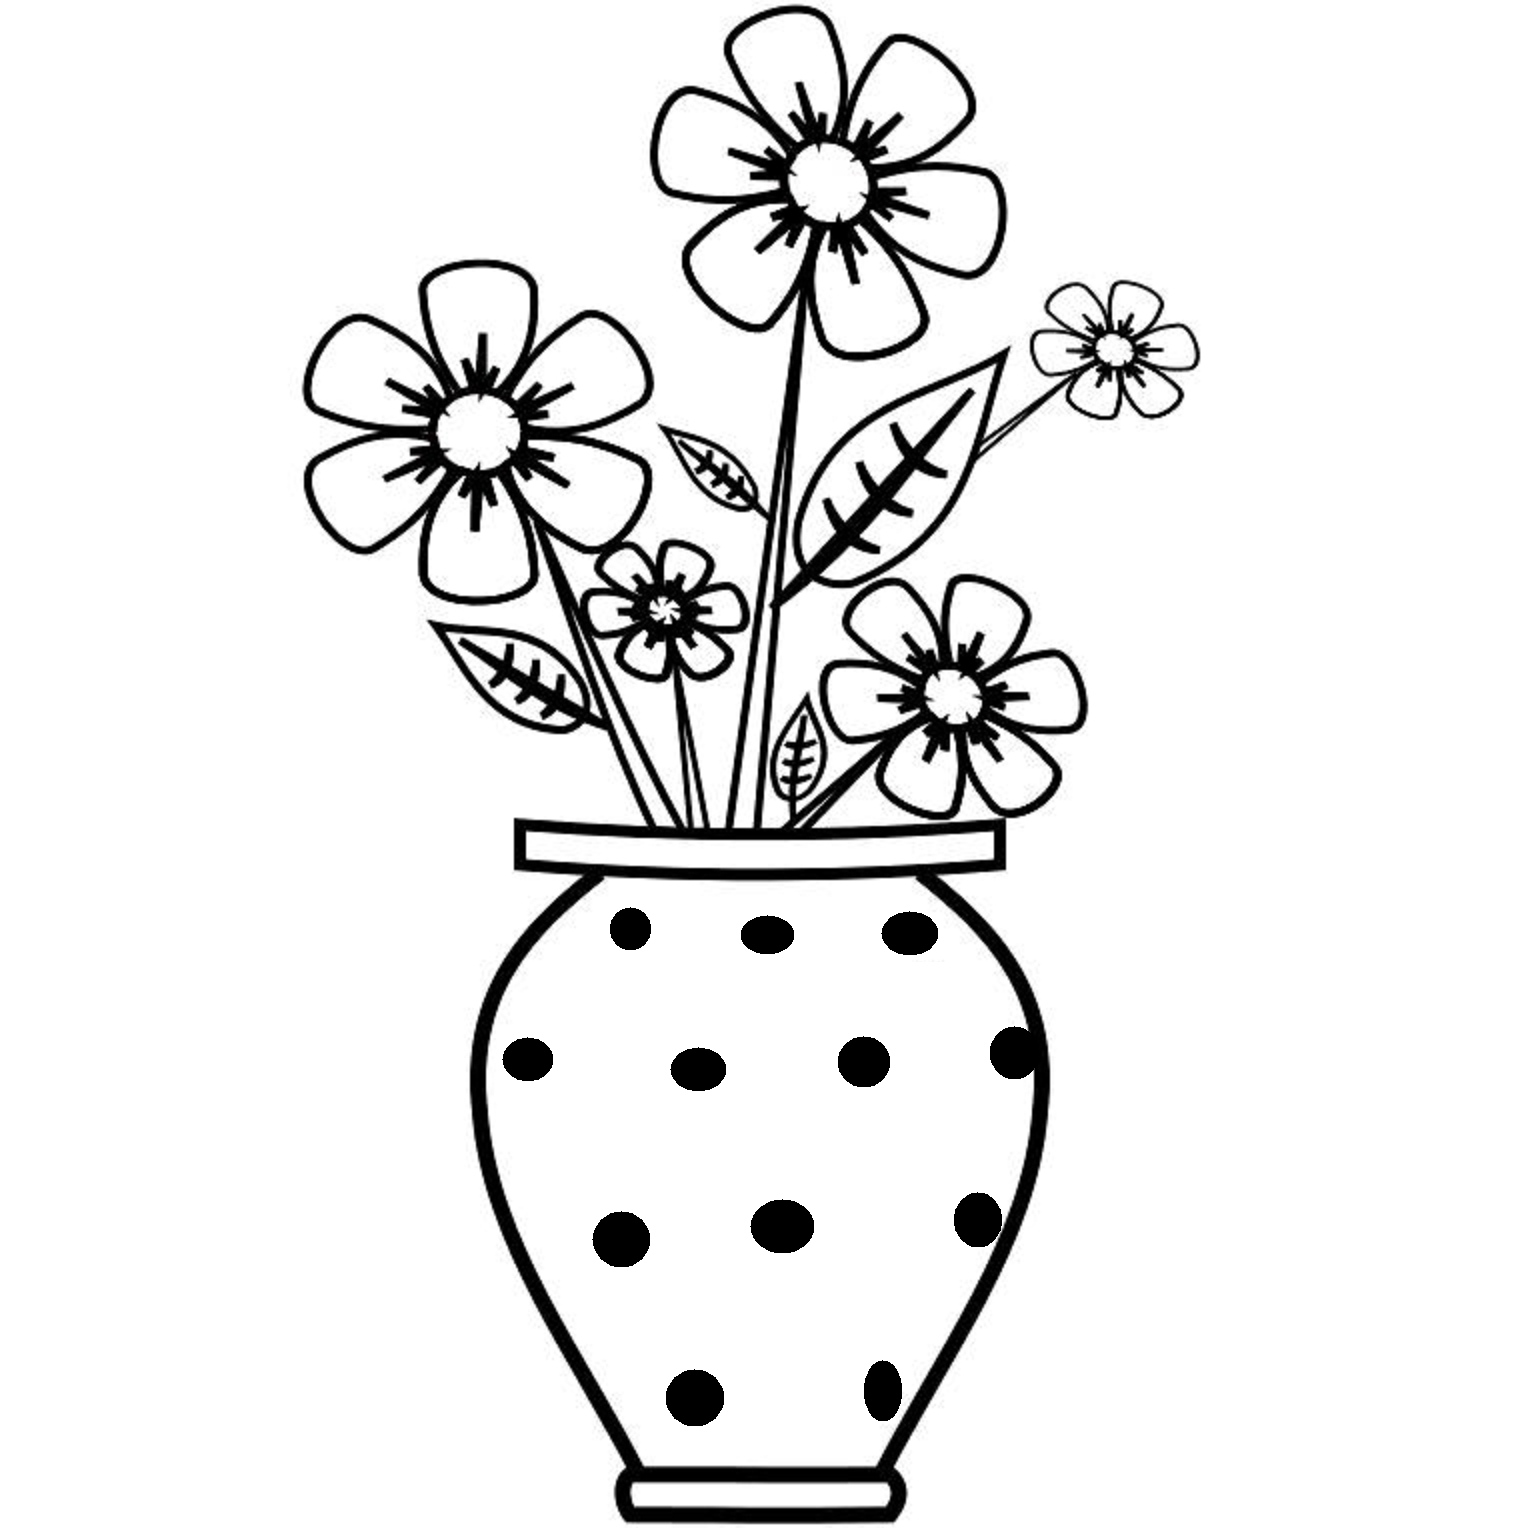 Flower vase clipart black and white New Clipart Black And.